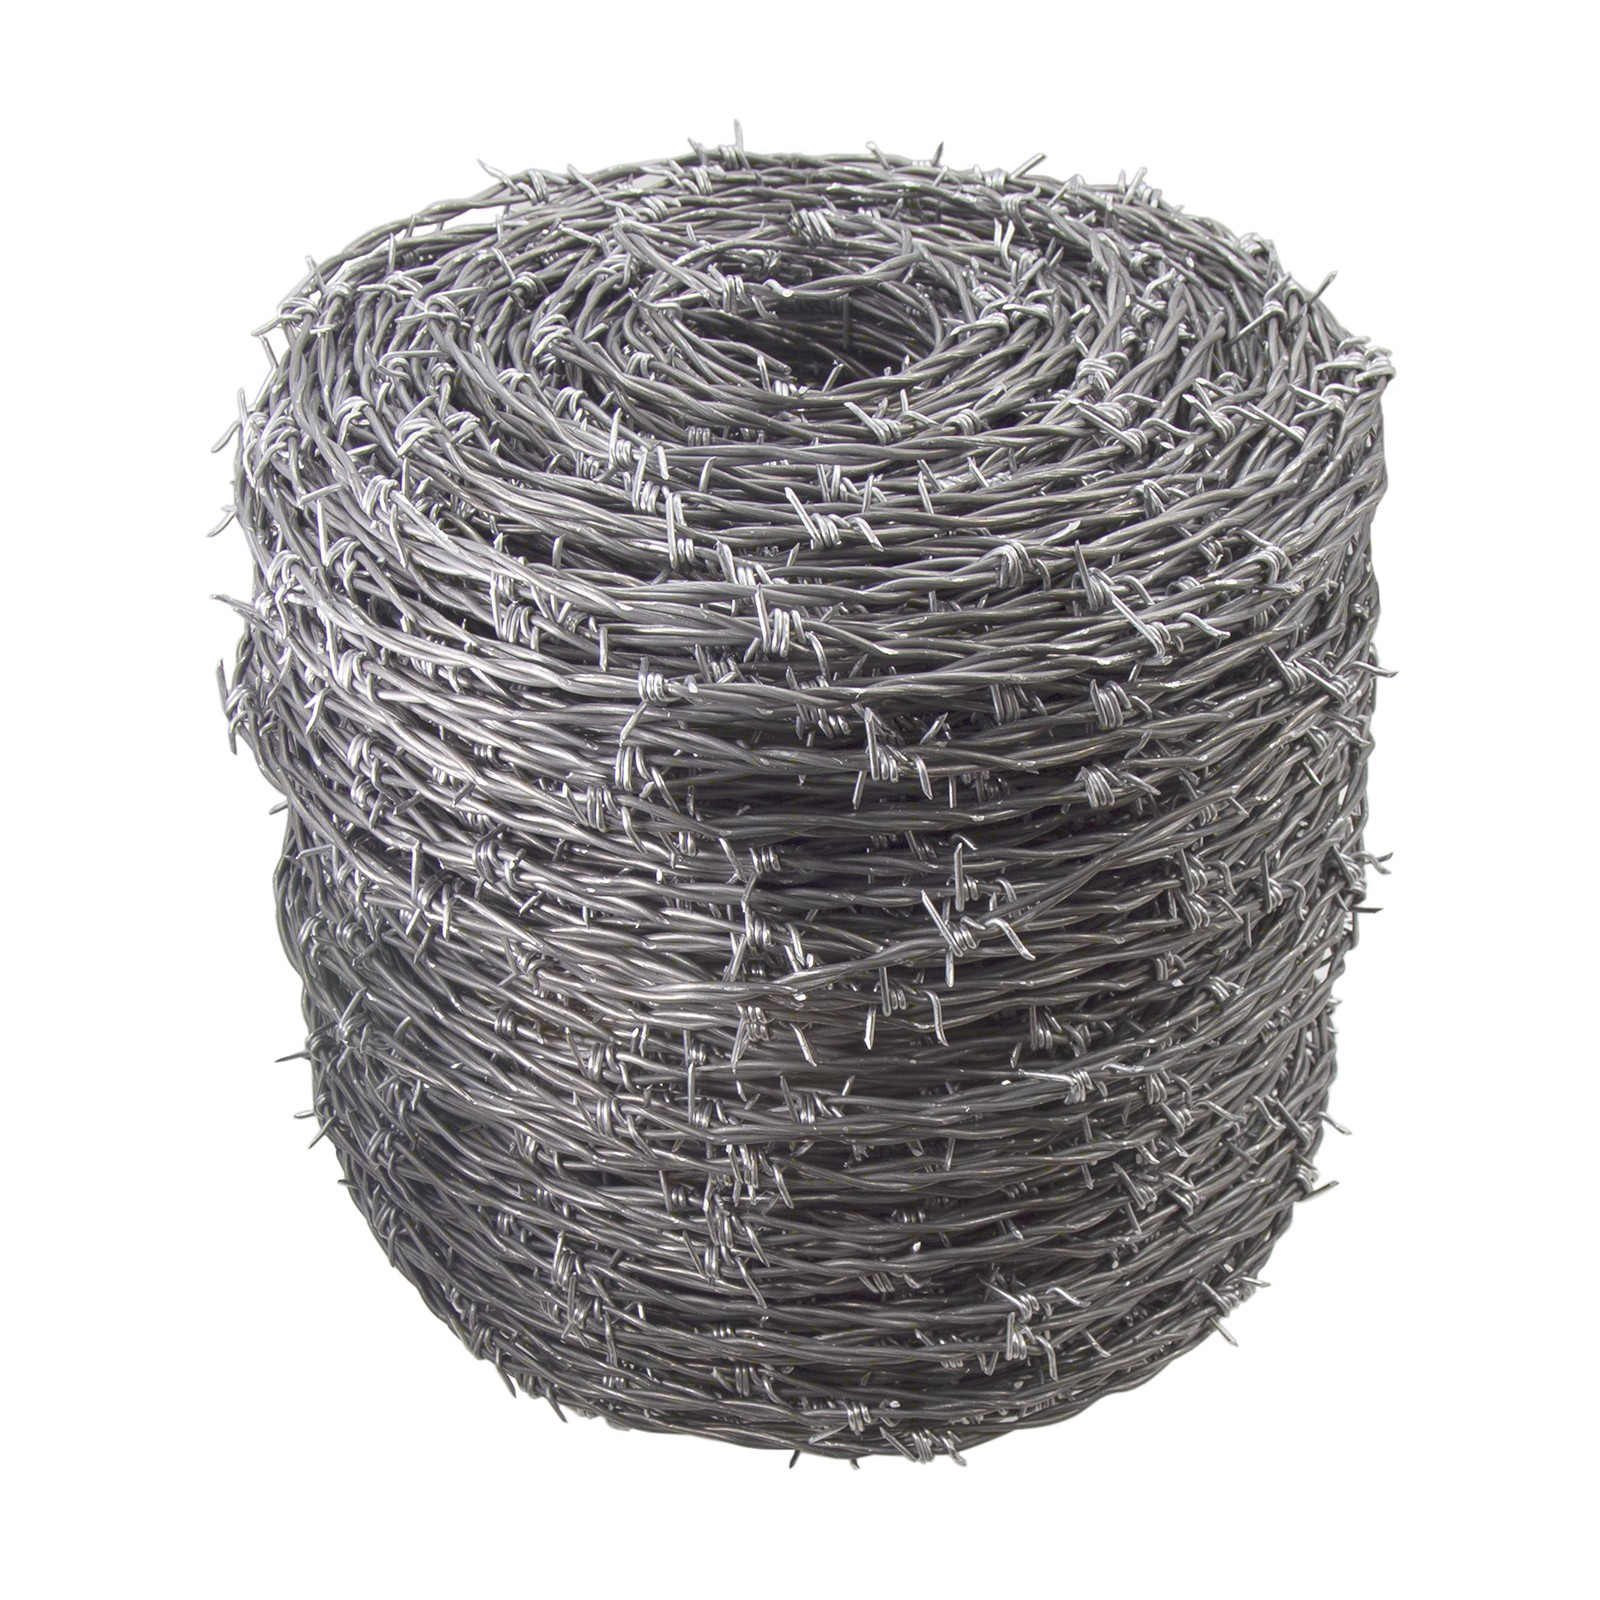 Igiciro gihenze Cyinshi Galvanized Wire hamwe na Customerized Specific